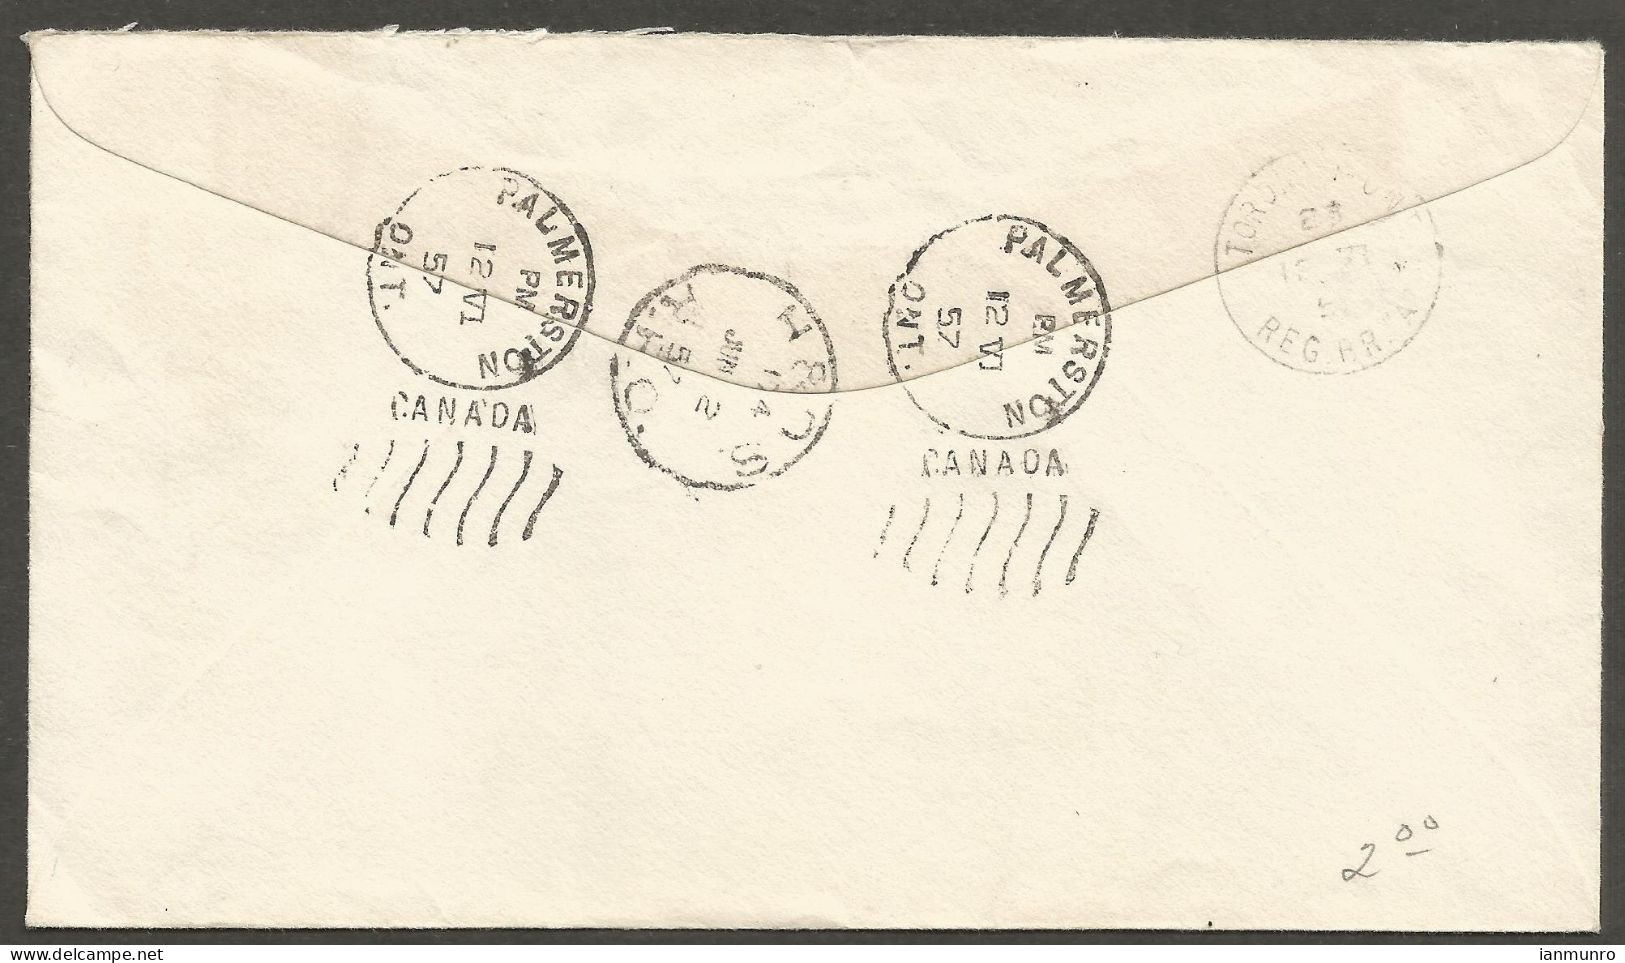 1957 Registered Corner Card Cover 25c Chemical RPO Duplex Palmerston Ontario - Postal History